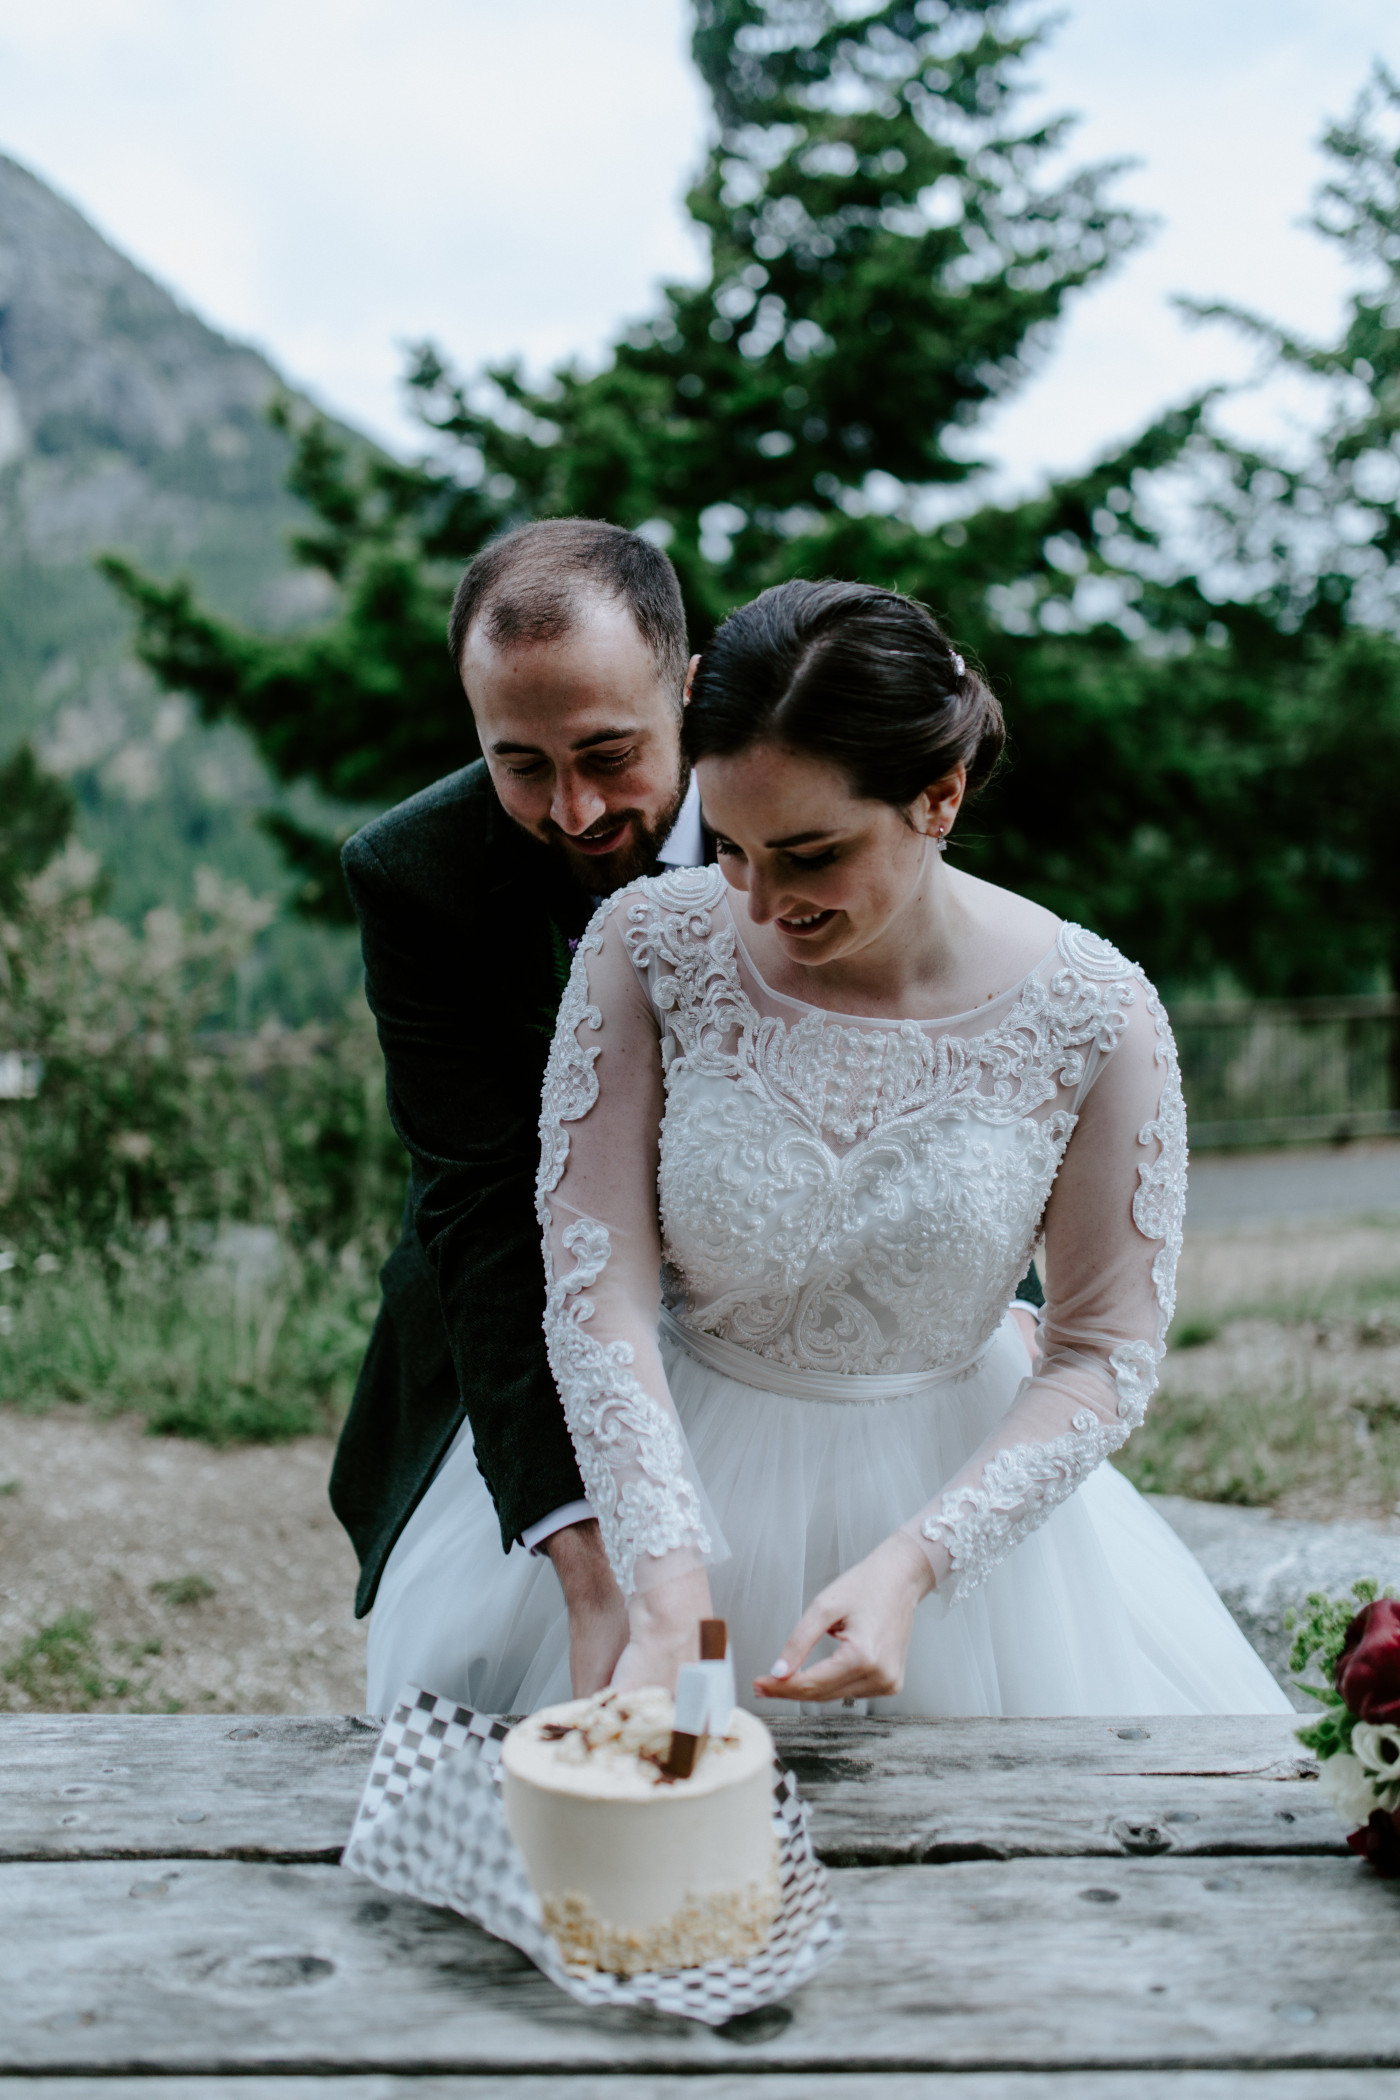 Elizabeth and Alex cut their wedding cake. Elopement photography at North Cascades National Park by Sienna Plus Josh.